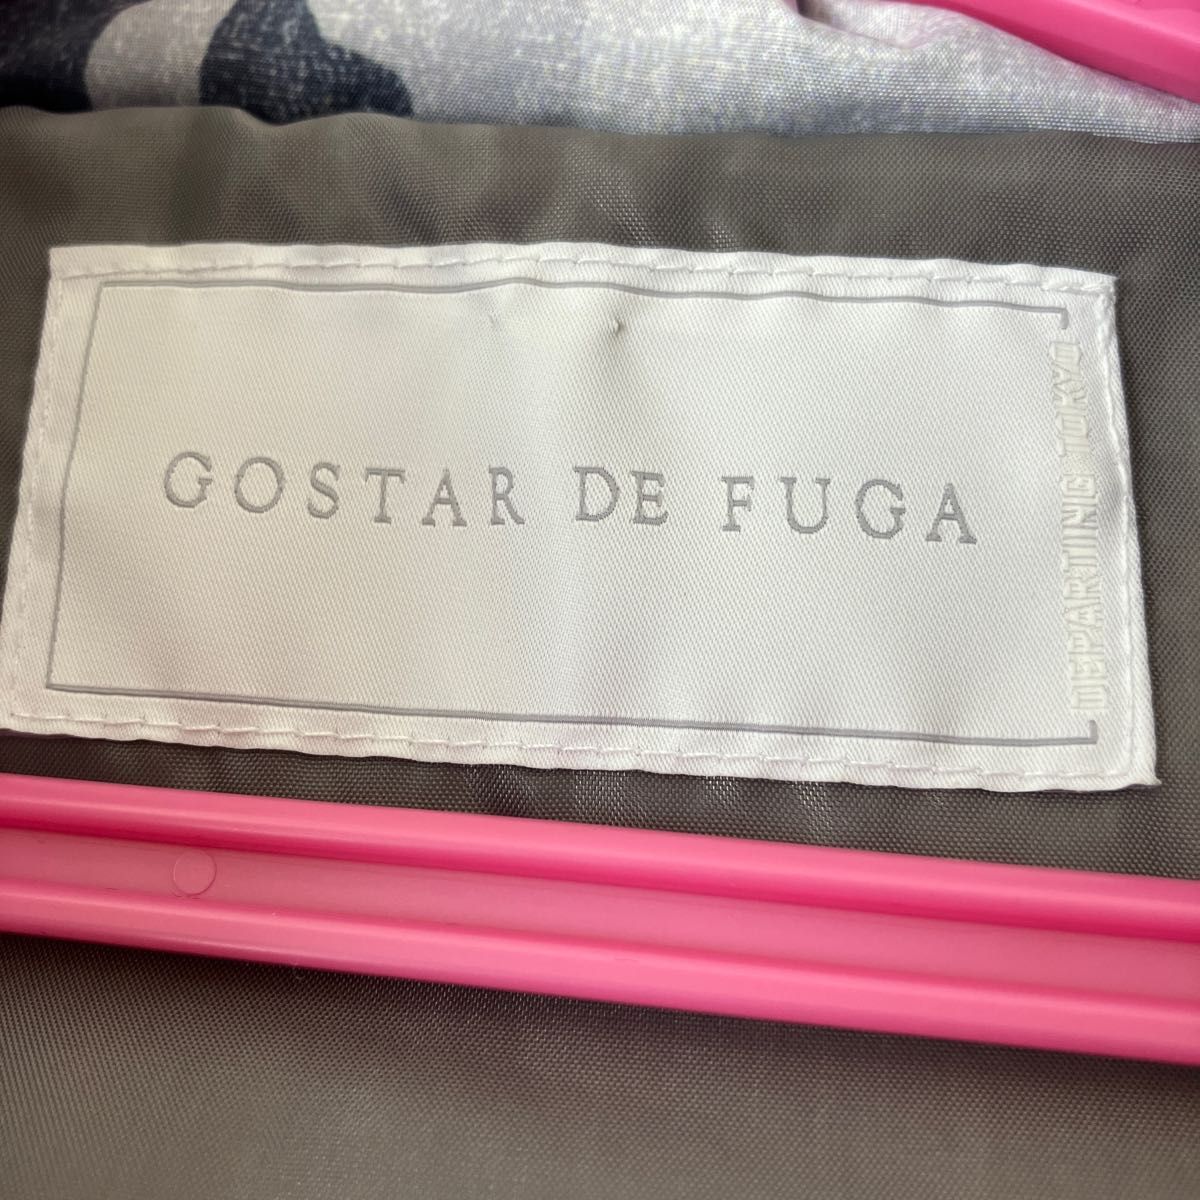 GOSTAR DE FUGAのダウンジャケット